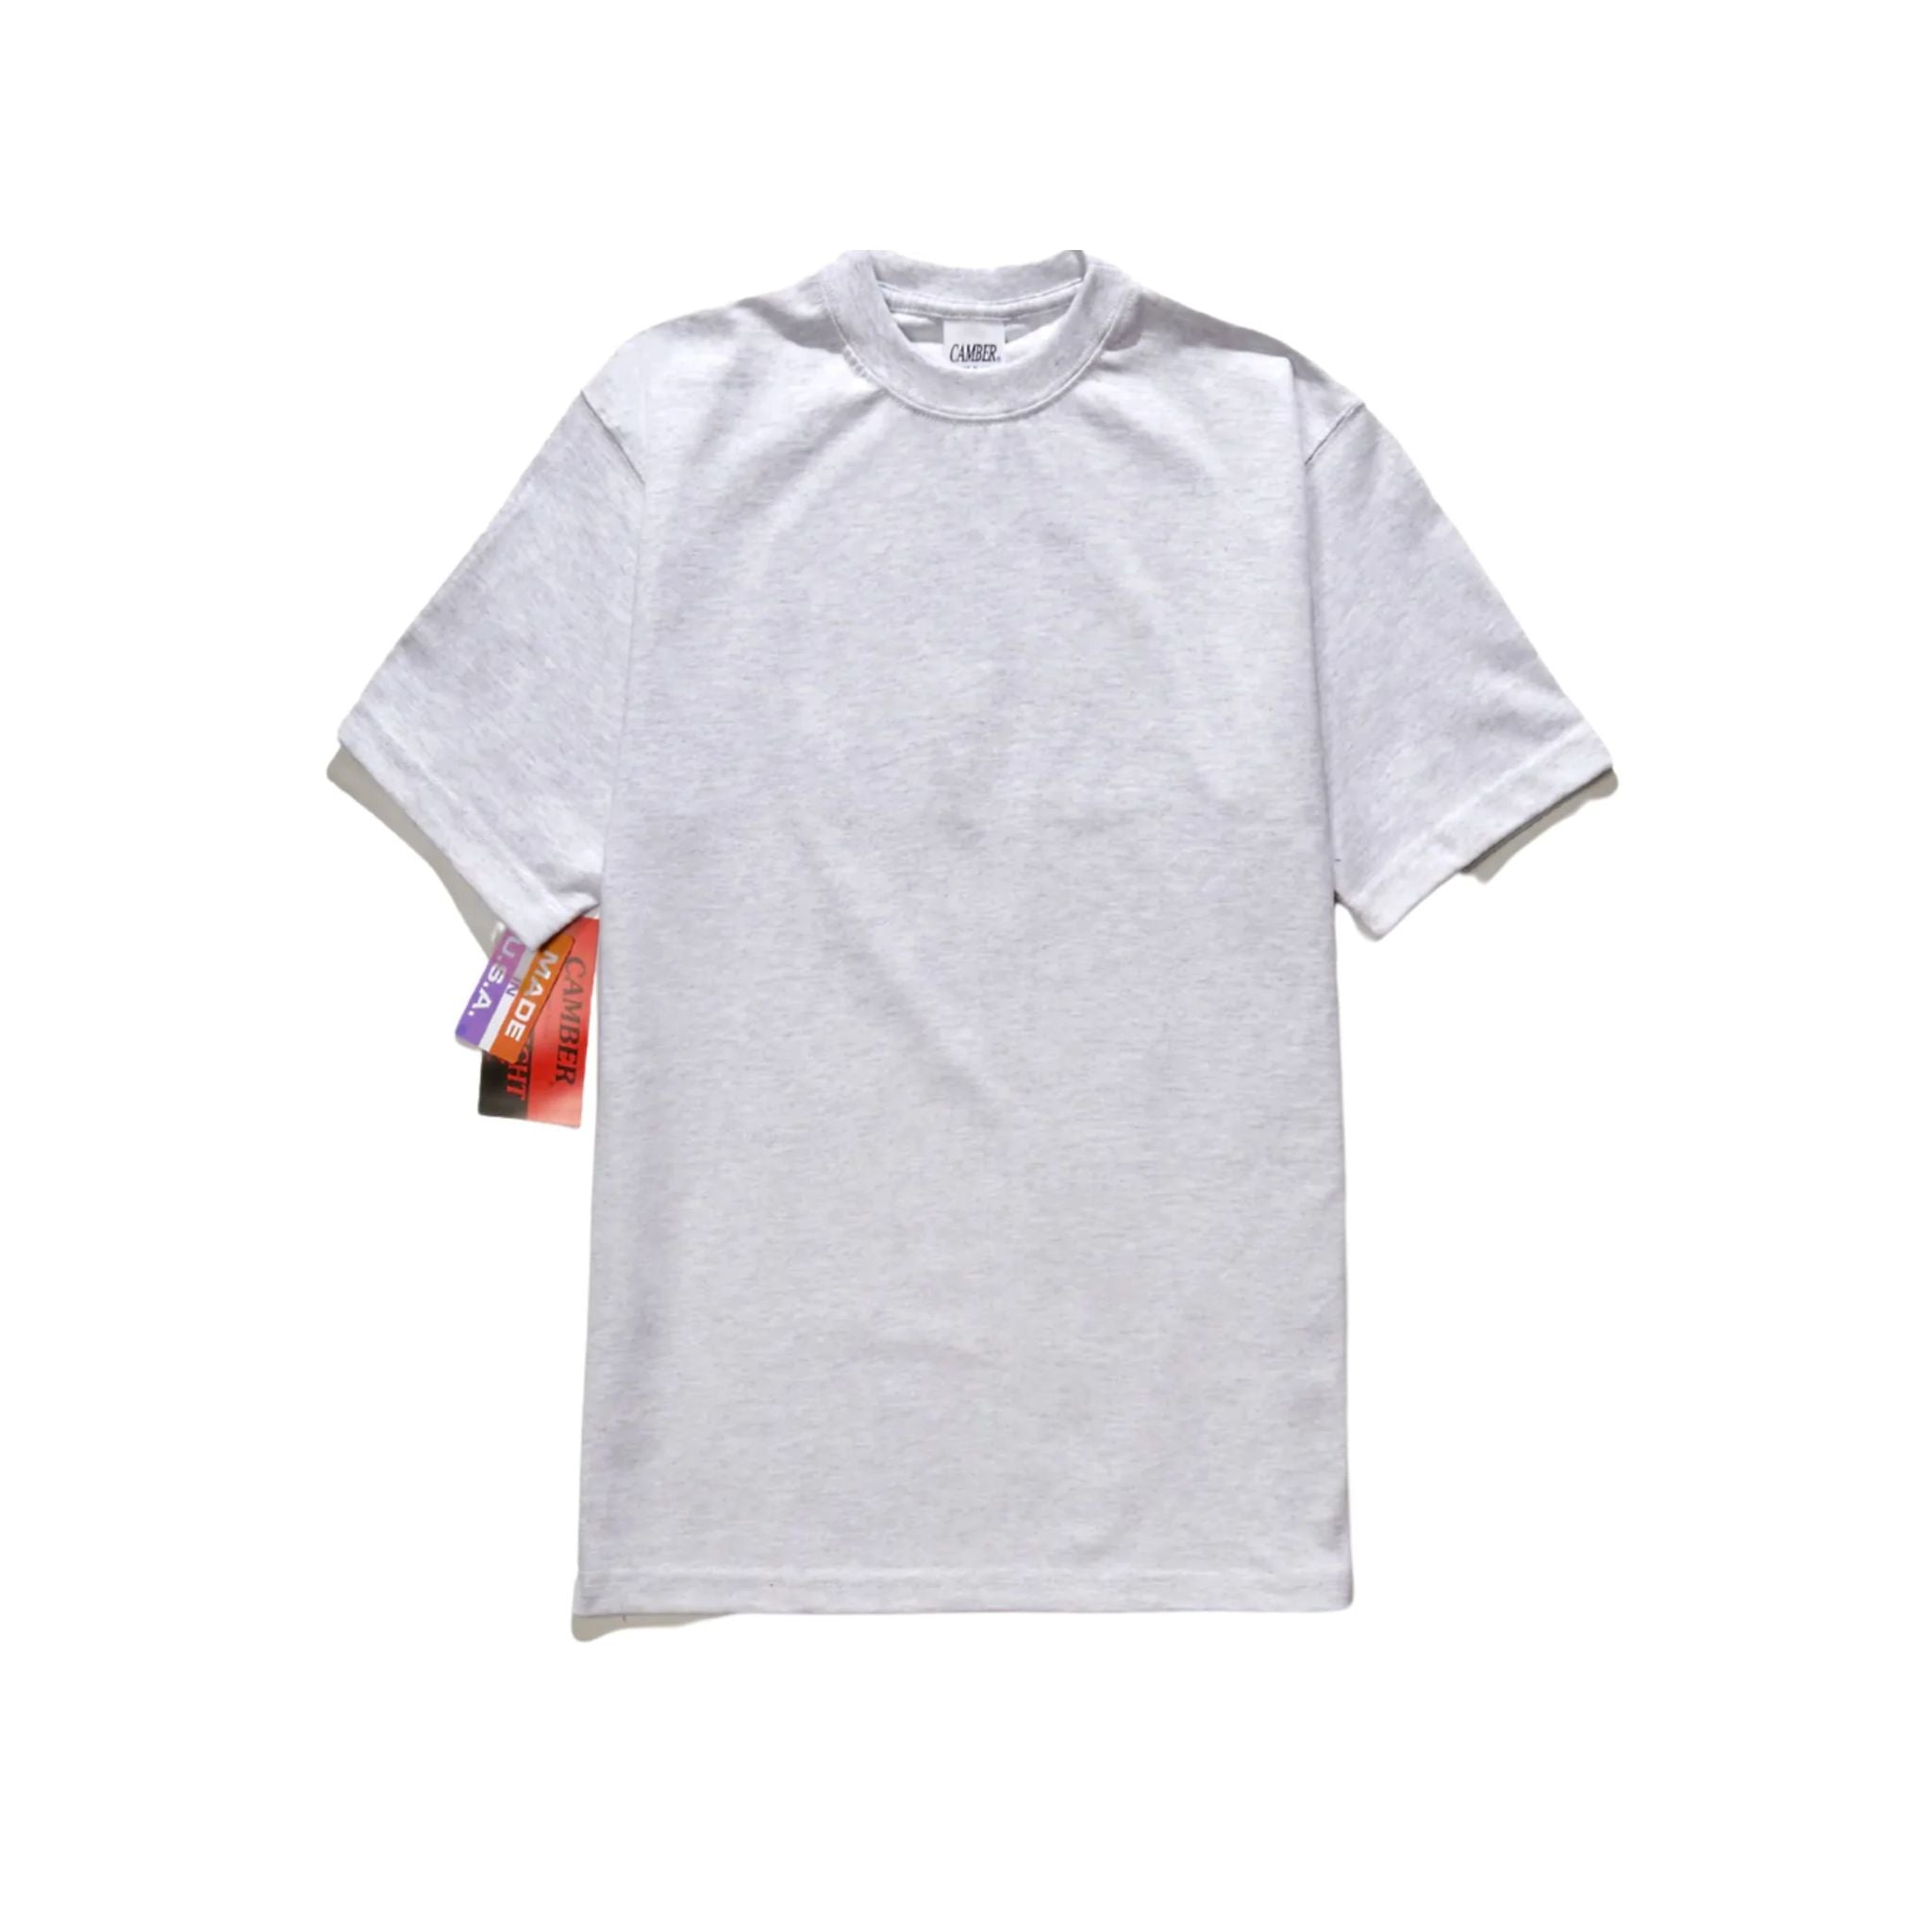 CAMBER USA Grey Binario09 – Finest - T-Shirt 6OZ